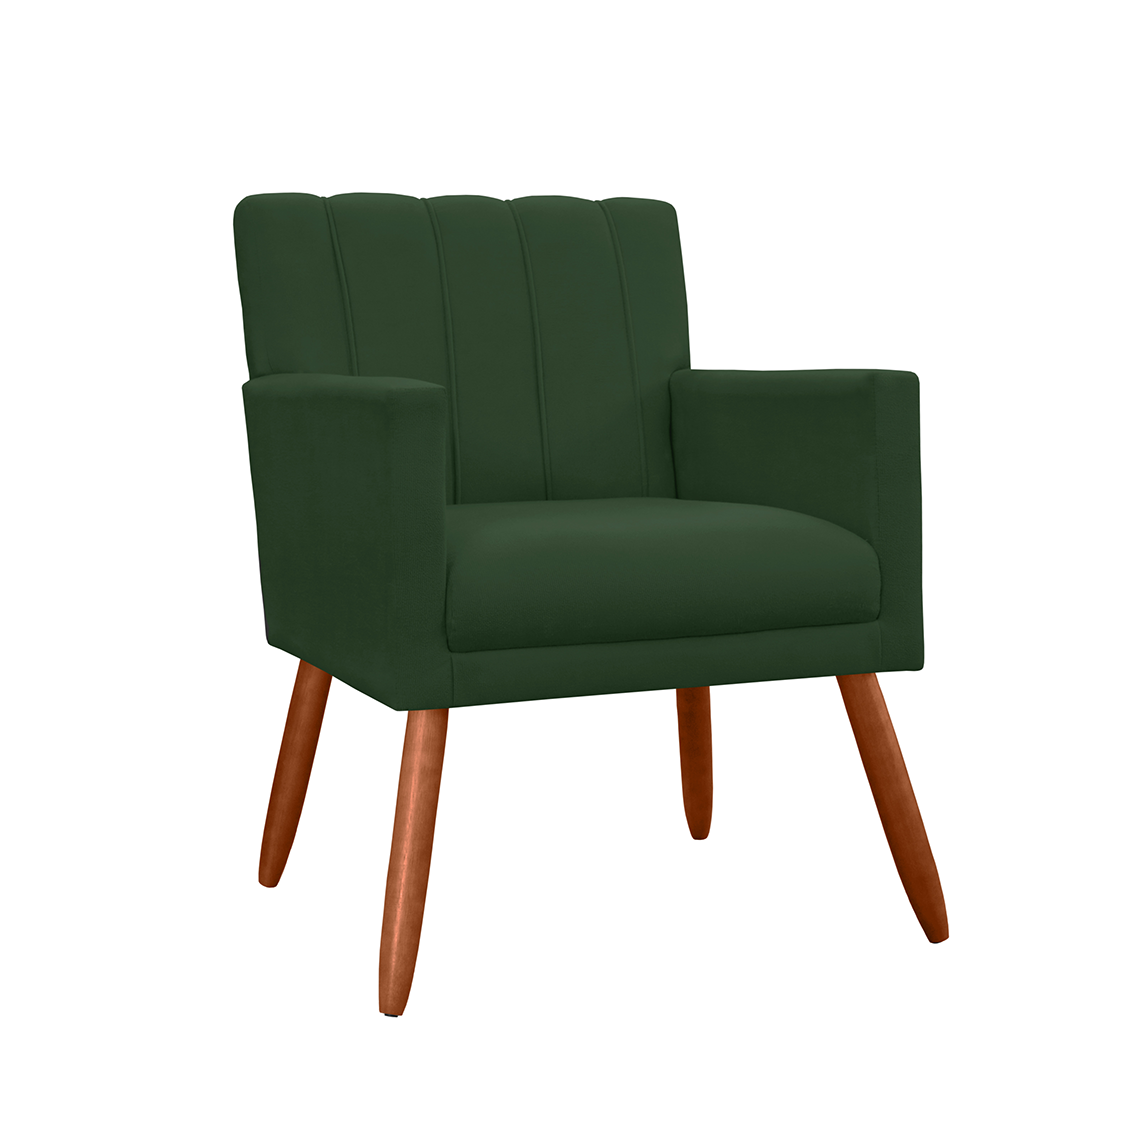 Poltrona Cadeira Estofada Para Sala de Visitas Cecília Suede Verde - LM DECOR